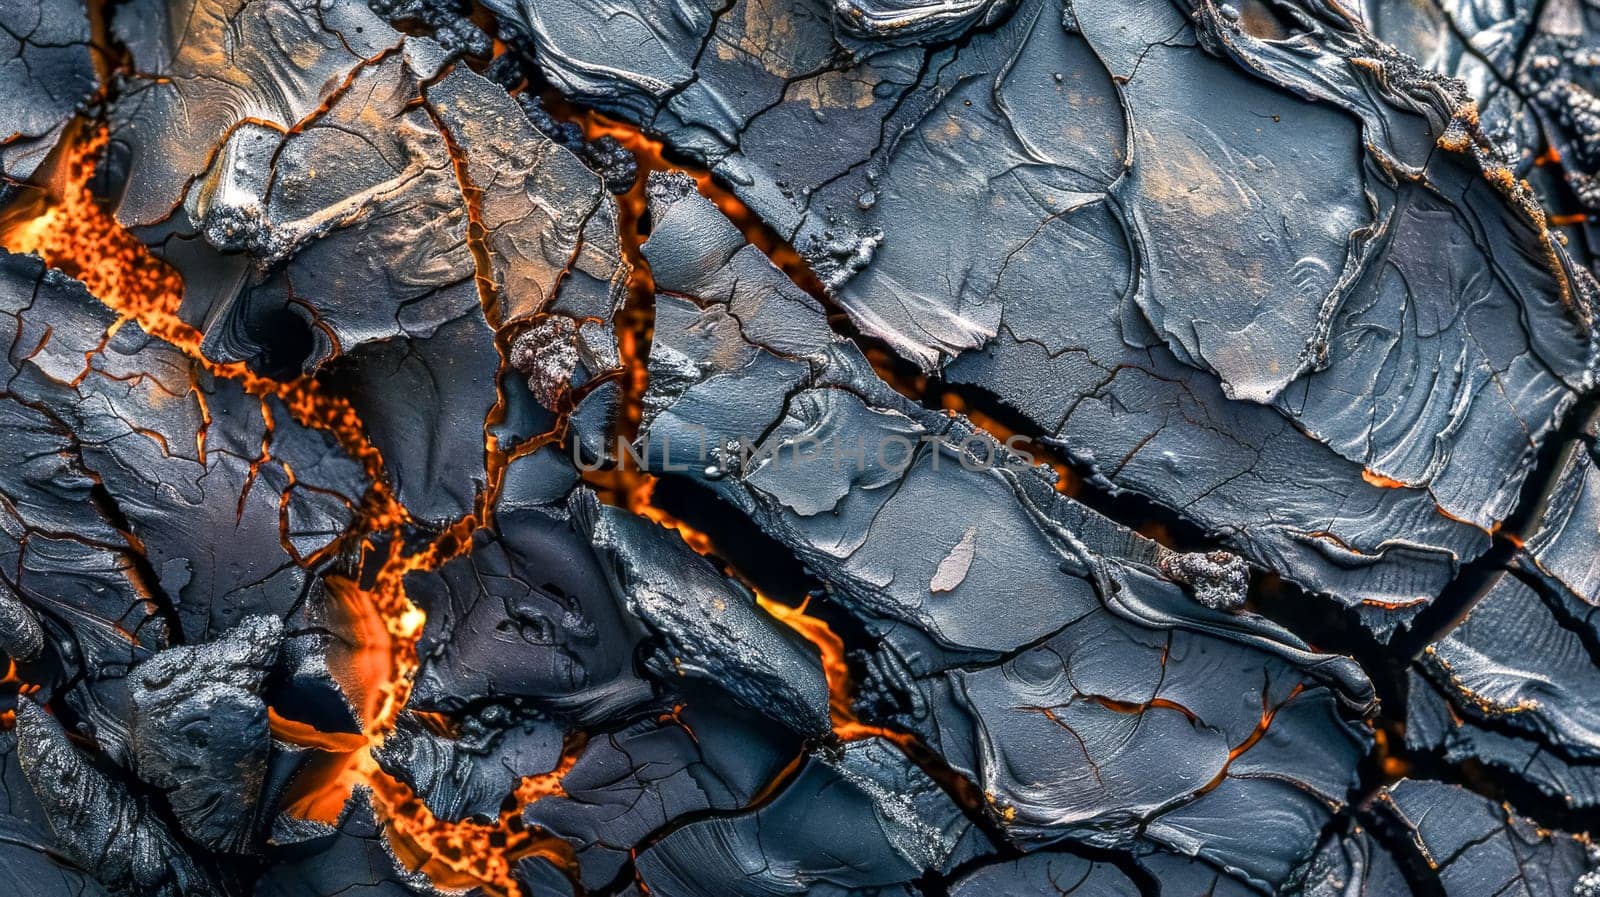 Glowing lava cracks in charred landscape by Edophoto